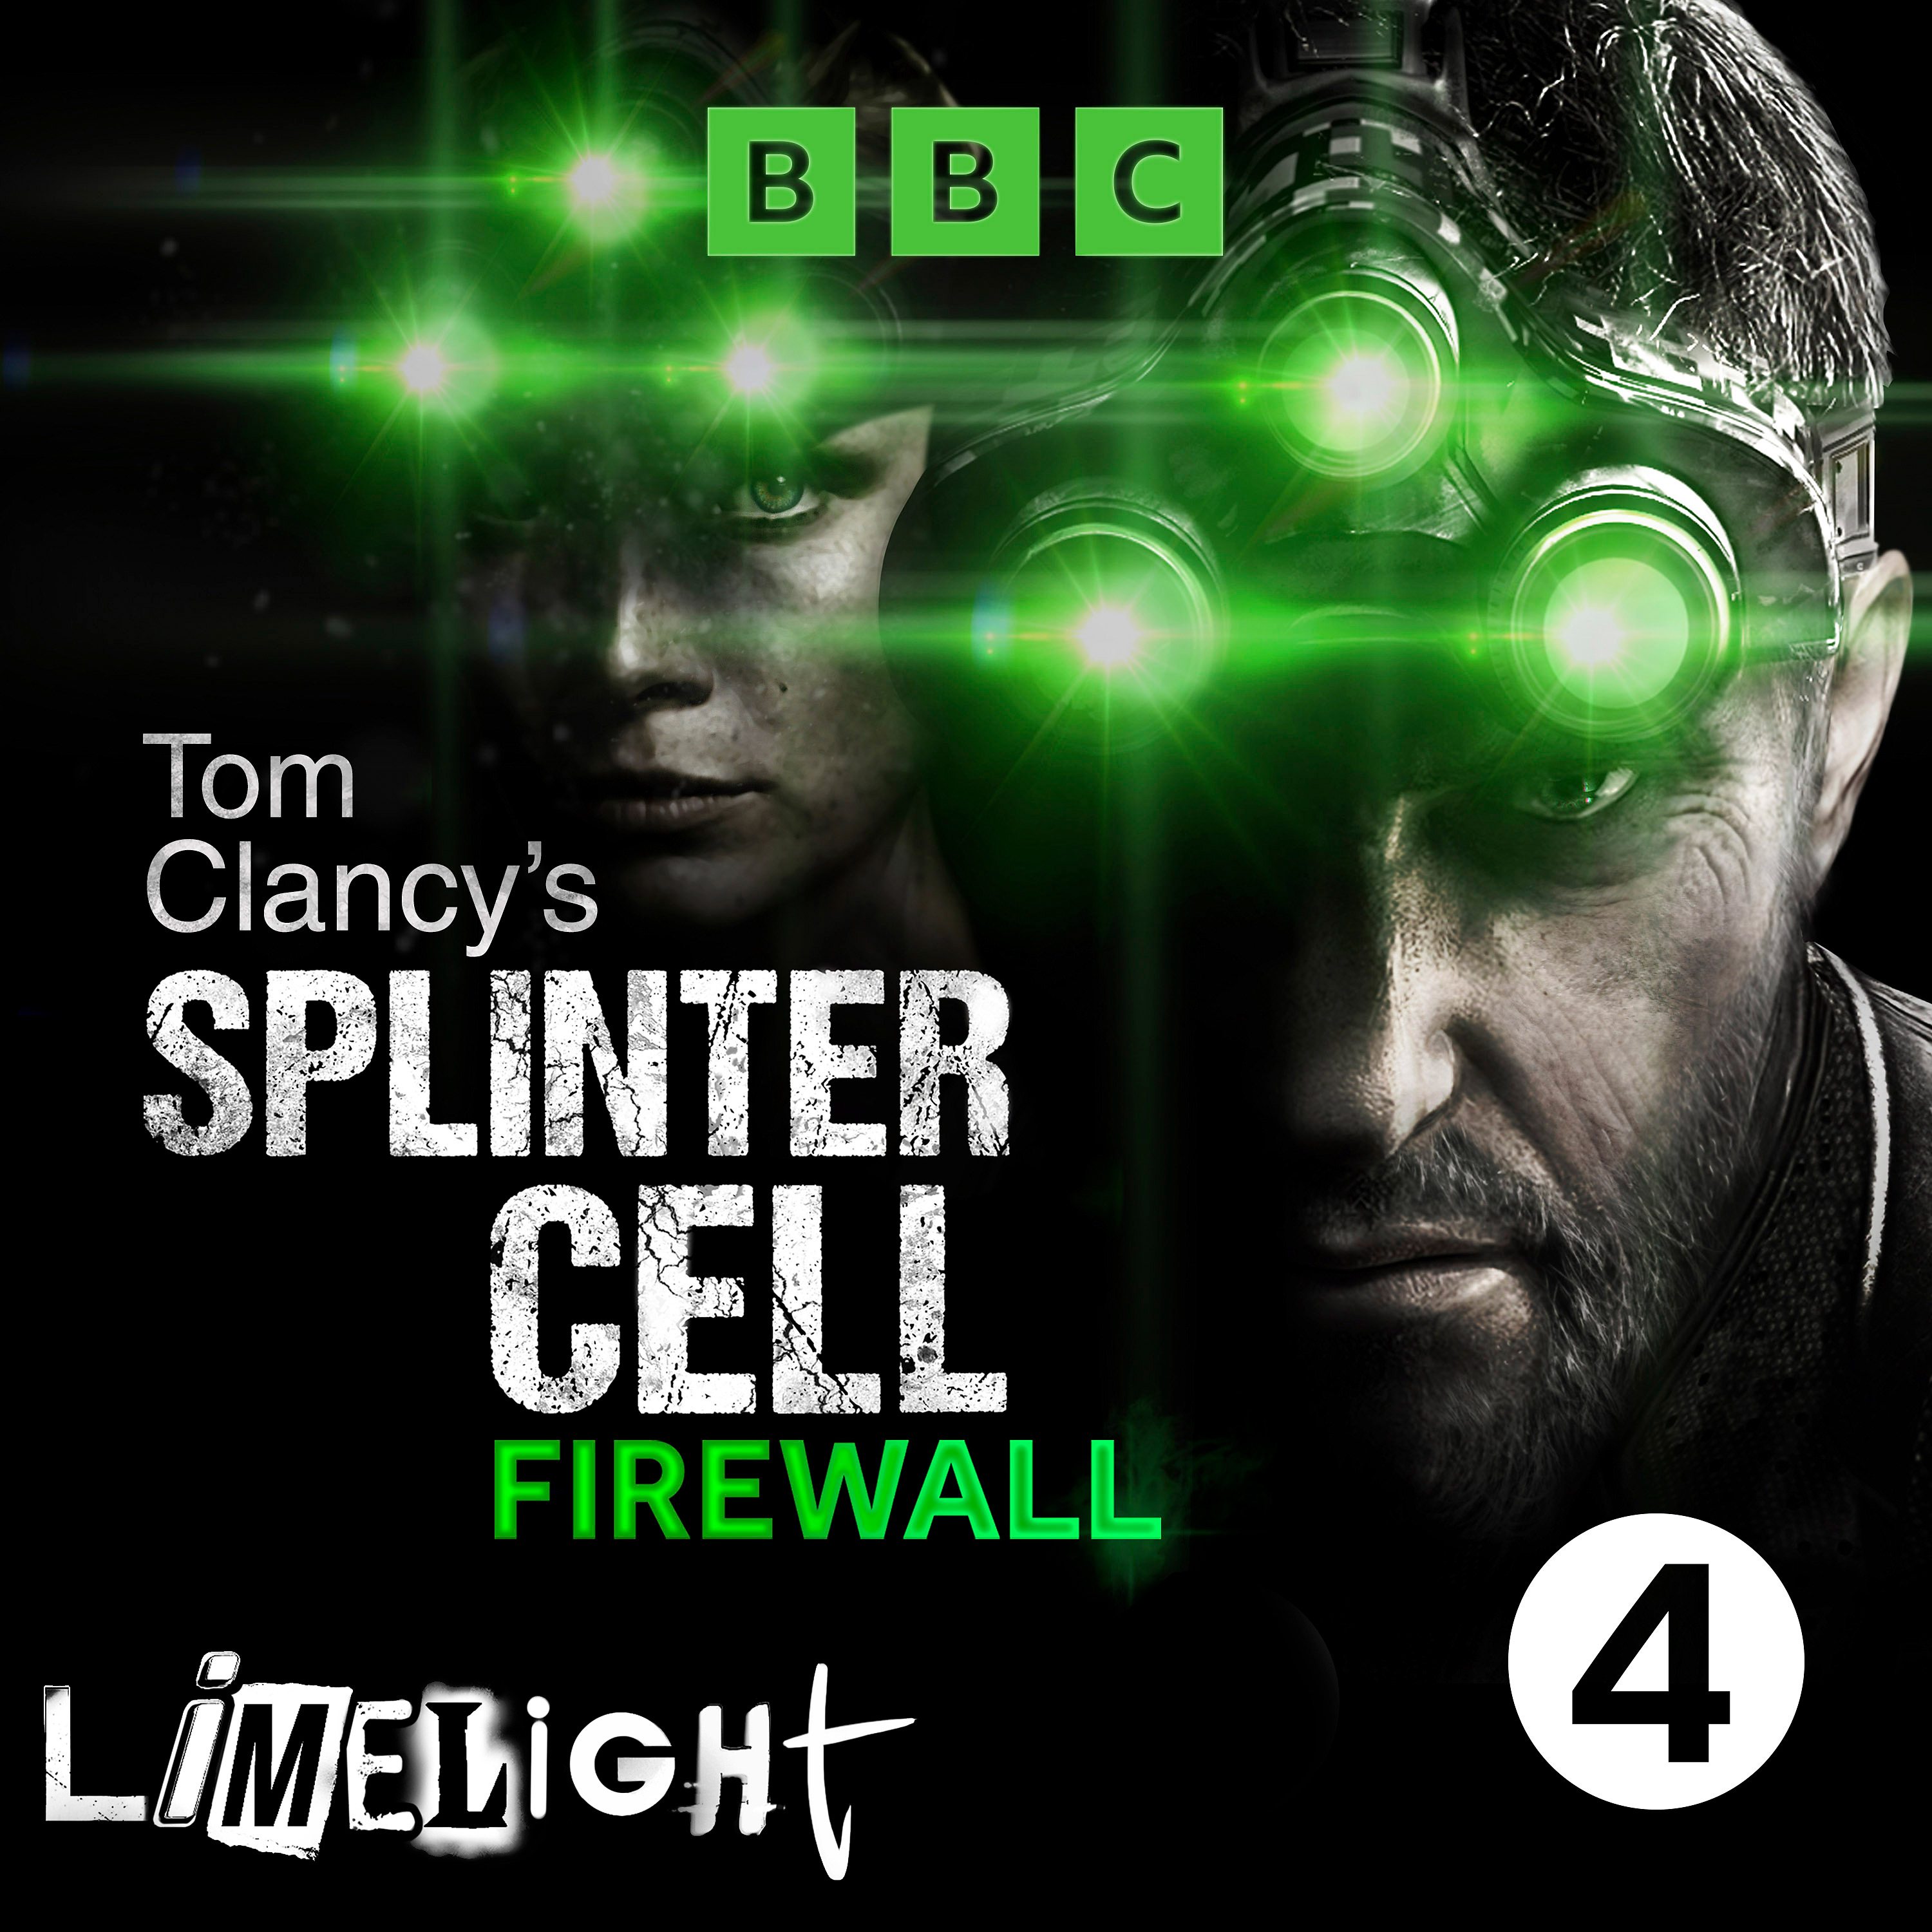 Tom Clancy’s Splinter Cell: Firewall, Episode 1